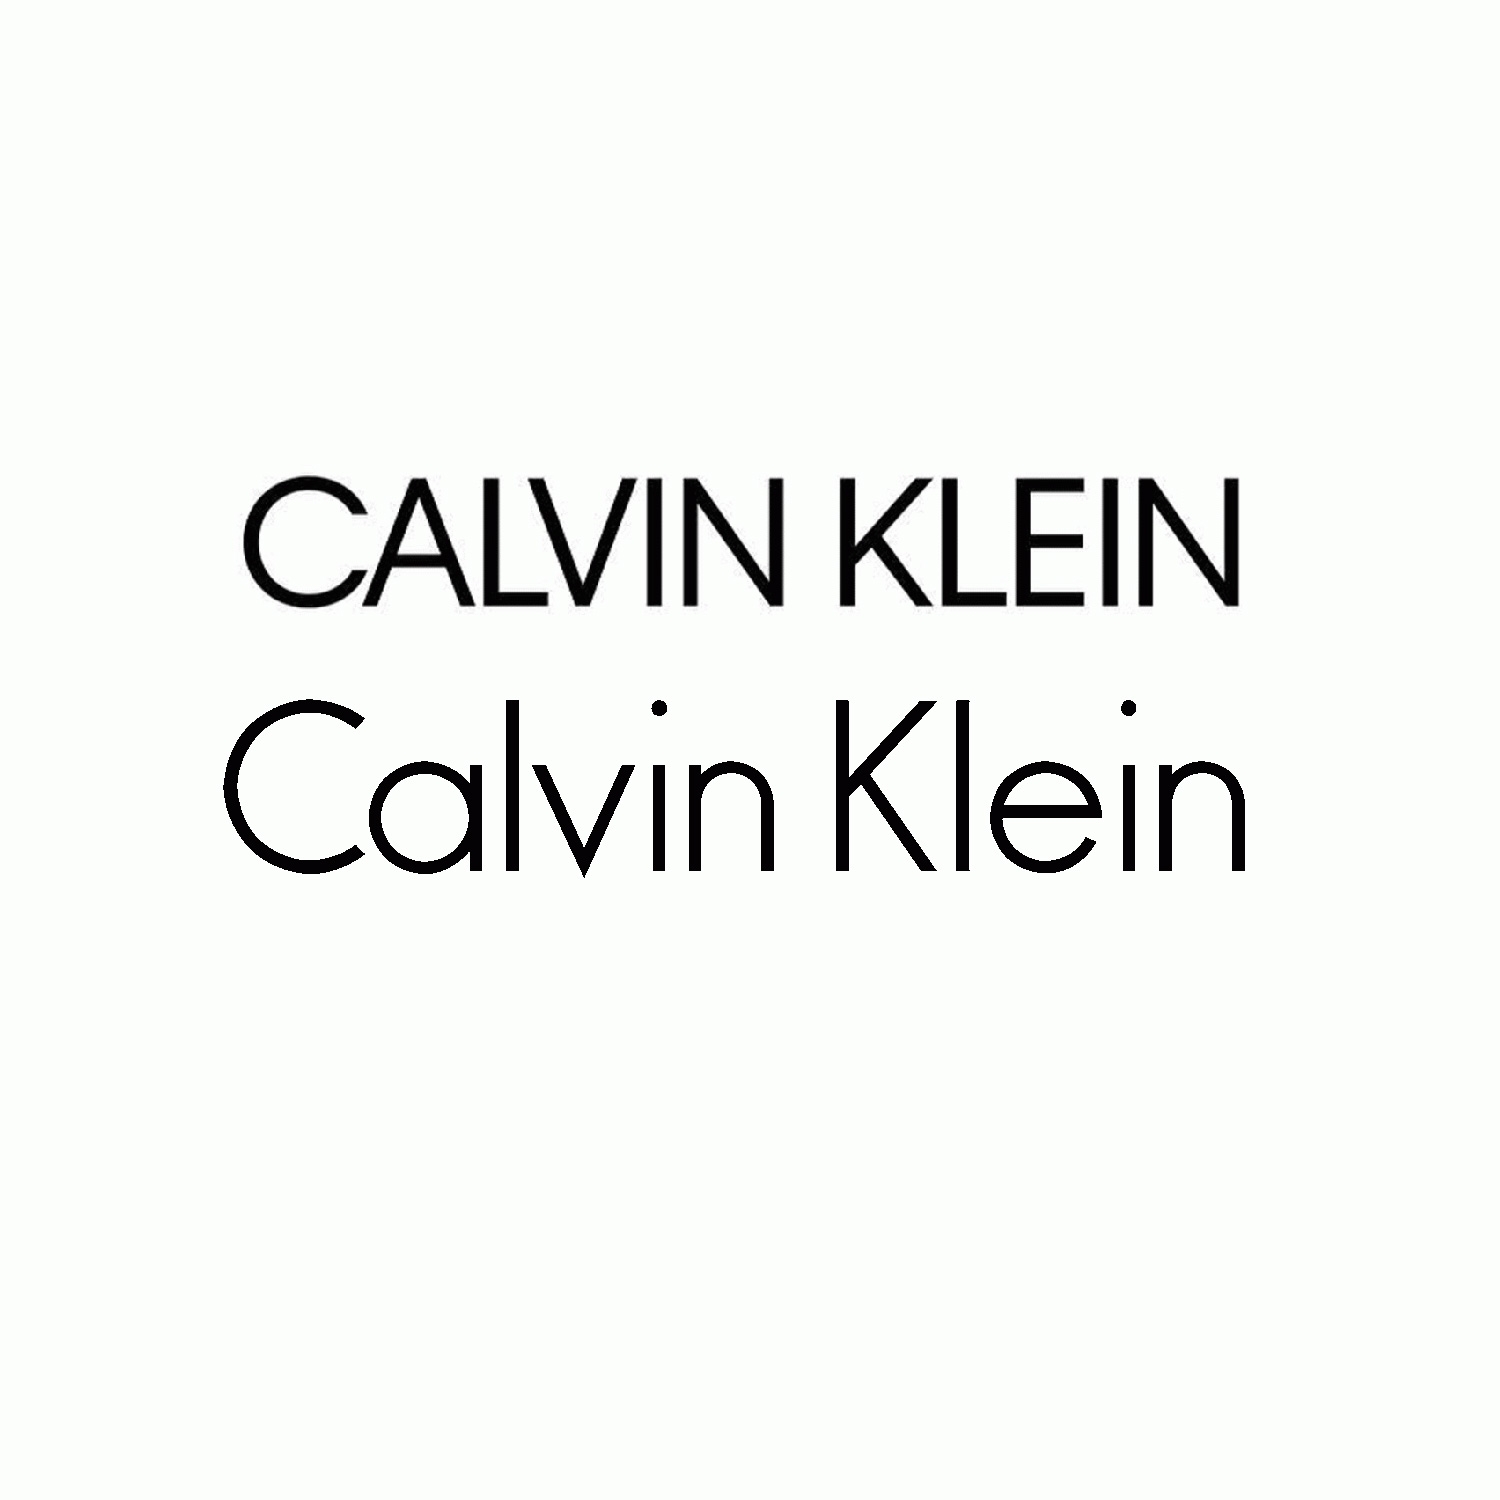 calvin-klein-new-logo-old